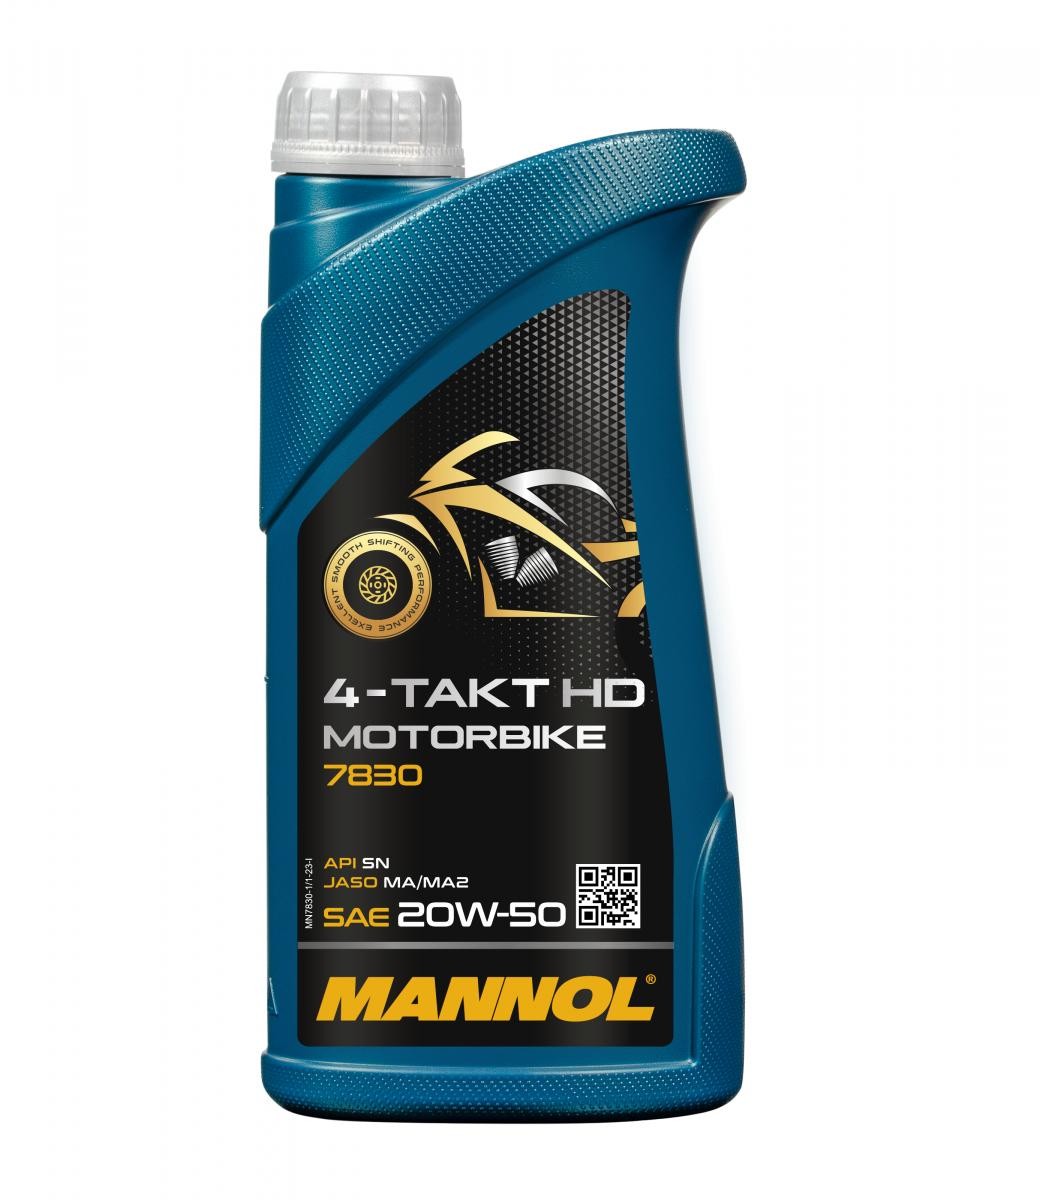 Car oil JASO MA MANNOL - MN7830-1 MOTORBIKE, 4-Takt HD